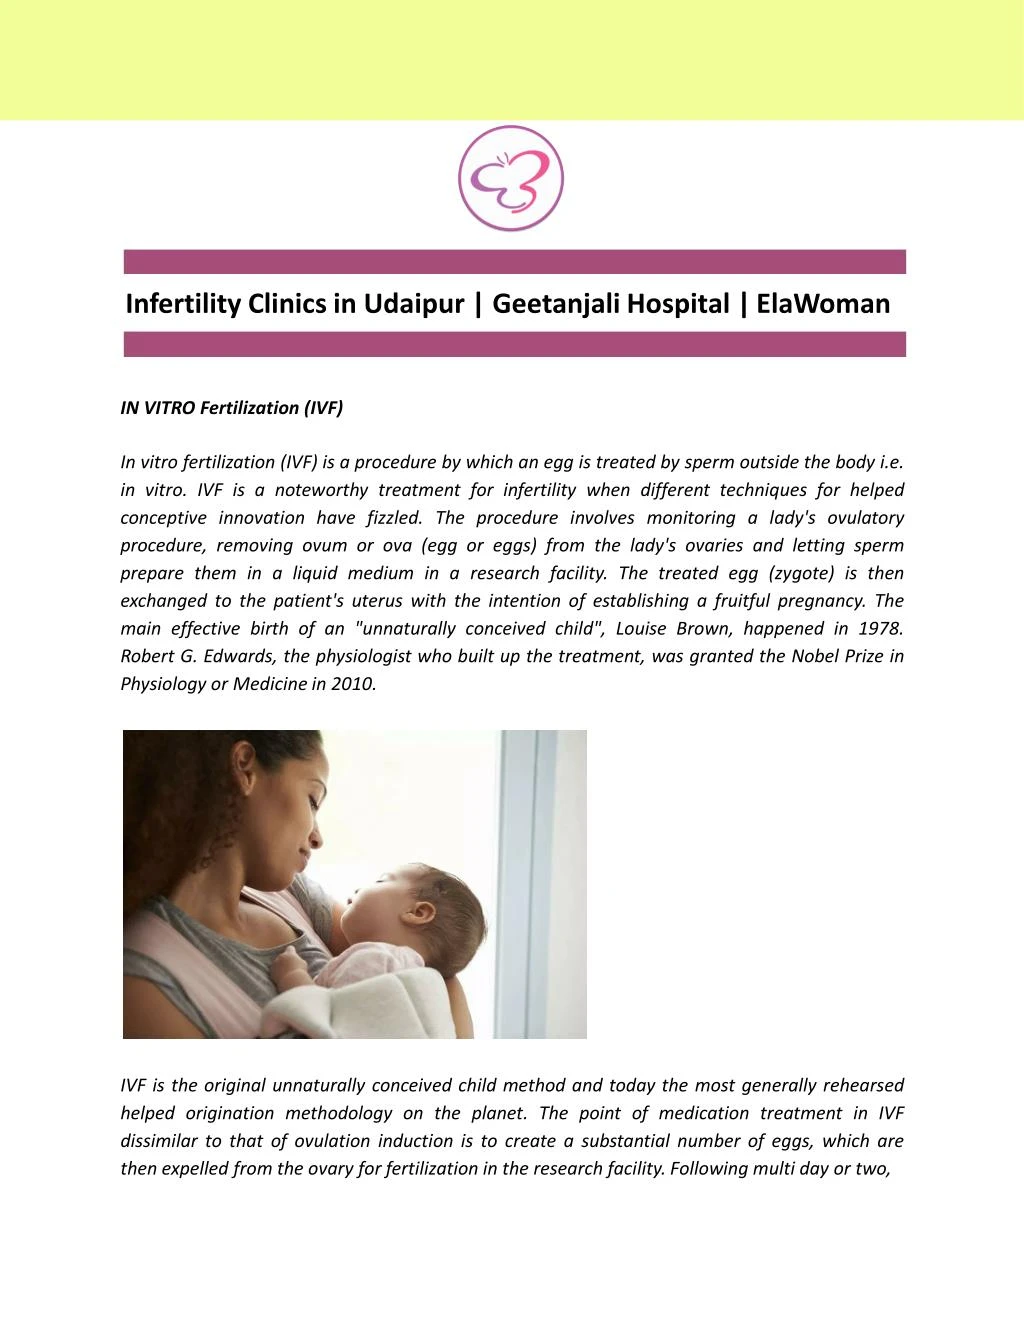 infertility clinics in udaipur geetanjali